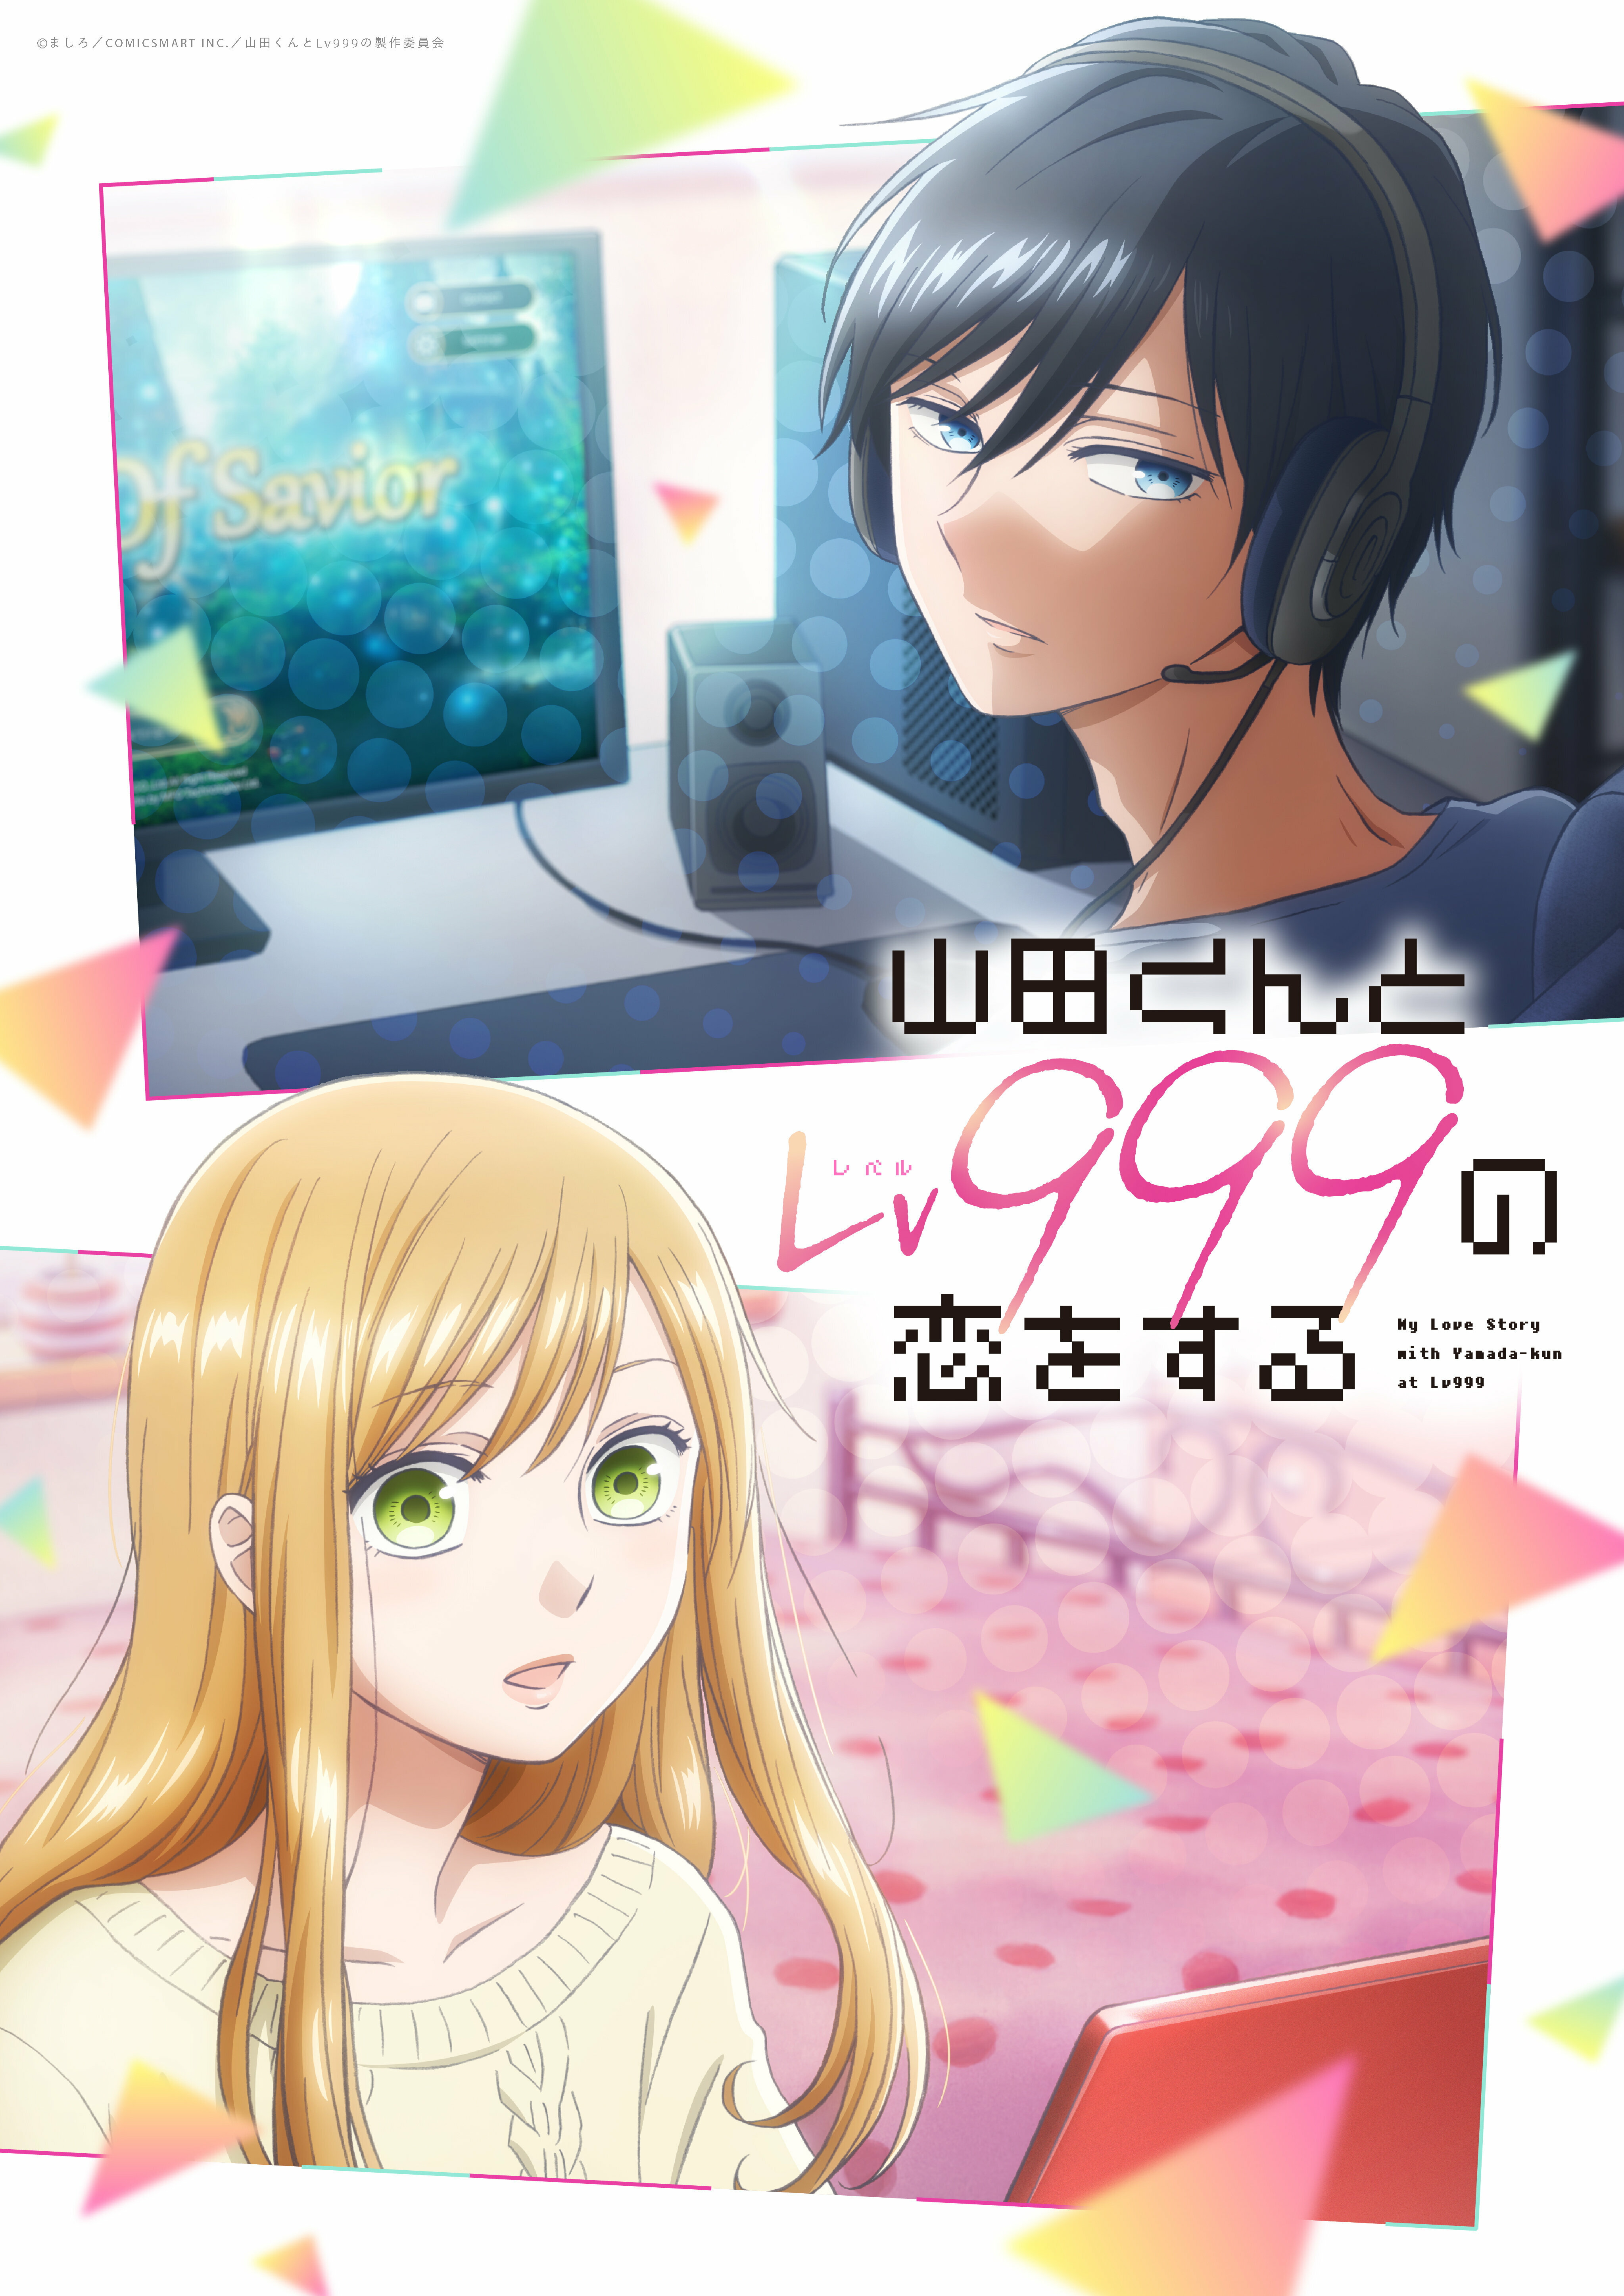 Eiwa Manga Store - #EIWAPREORDER - Manga My Love Story with Yamada